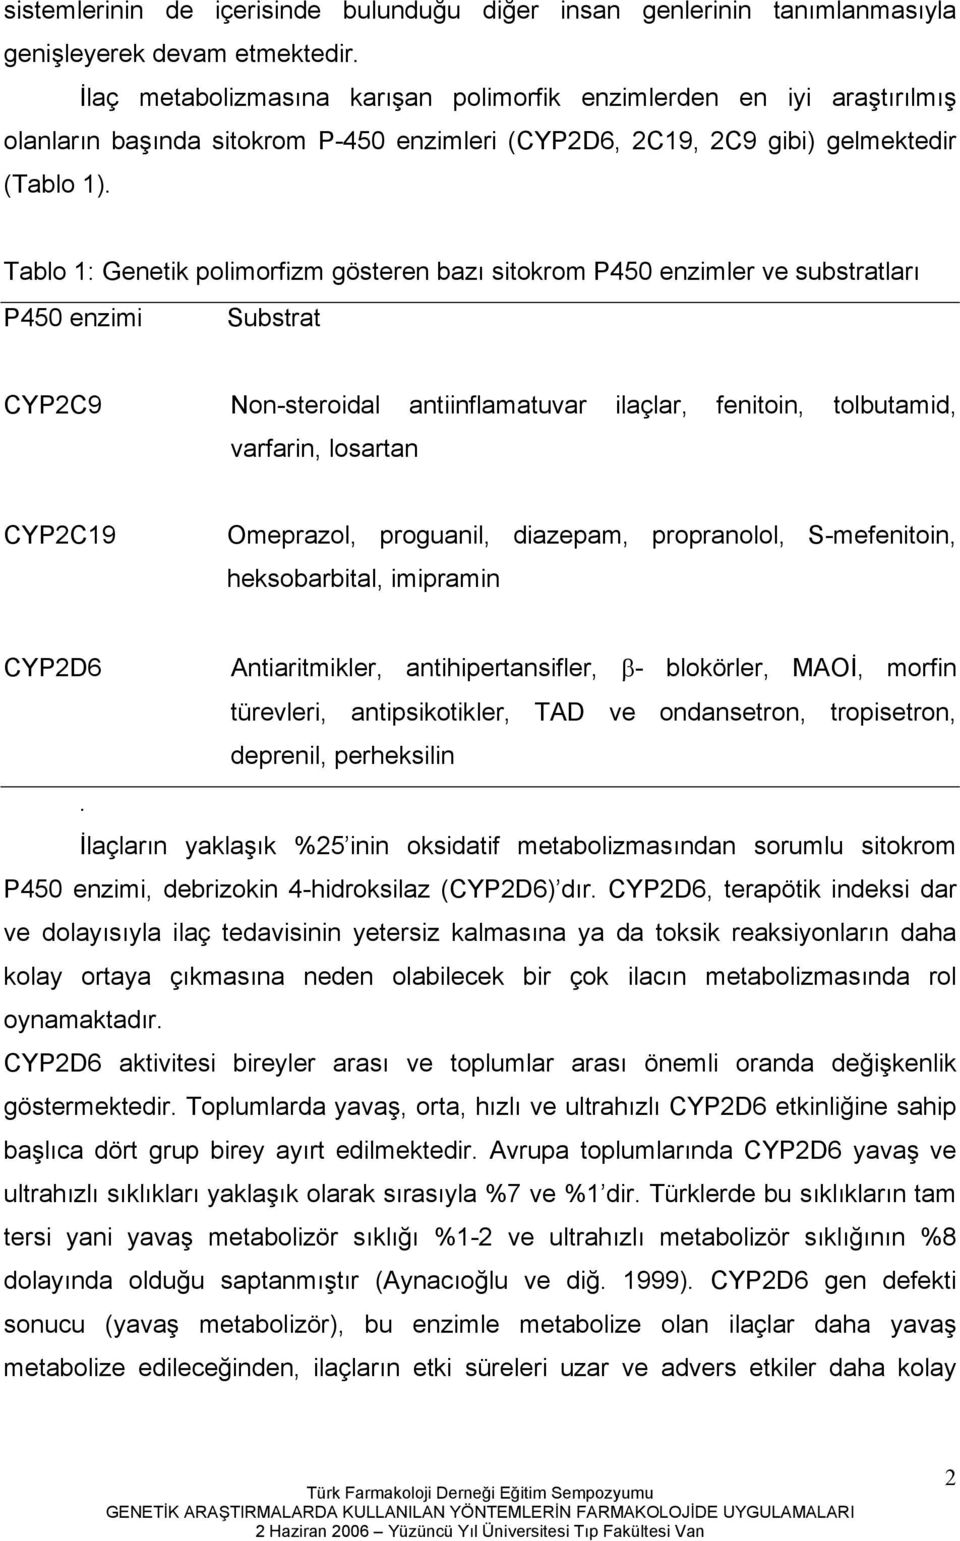 Tablo 1: Genetik polimorfizm gösteren bazı sitokrom P450 enzimler ve substratları P450 enzimi Substrat CYP2C9 Non-steroidal antiinflamatuvar ilaçlar, fenitoin, tolbutamid, varfarin, losartan CYP2C19